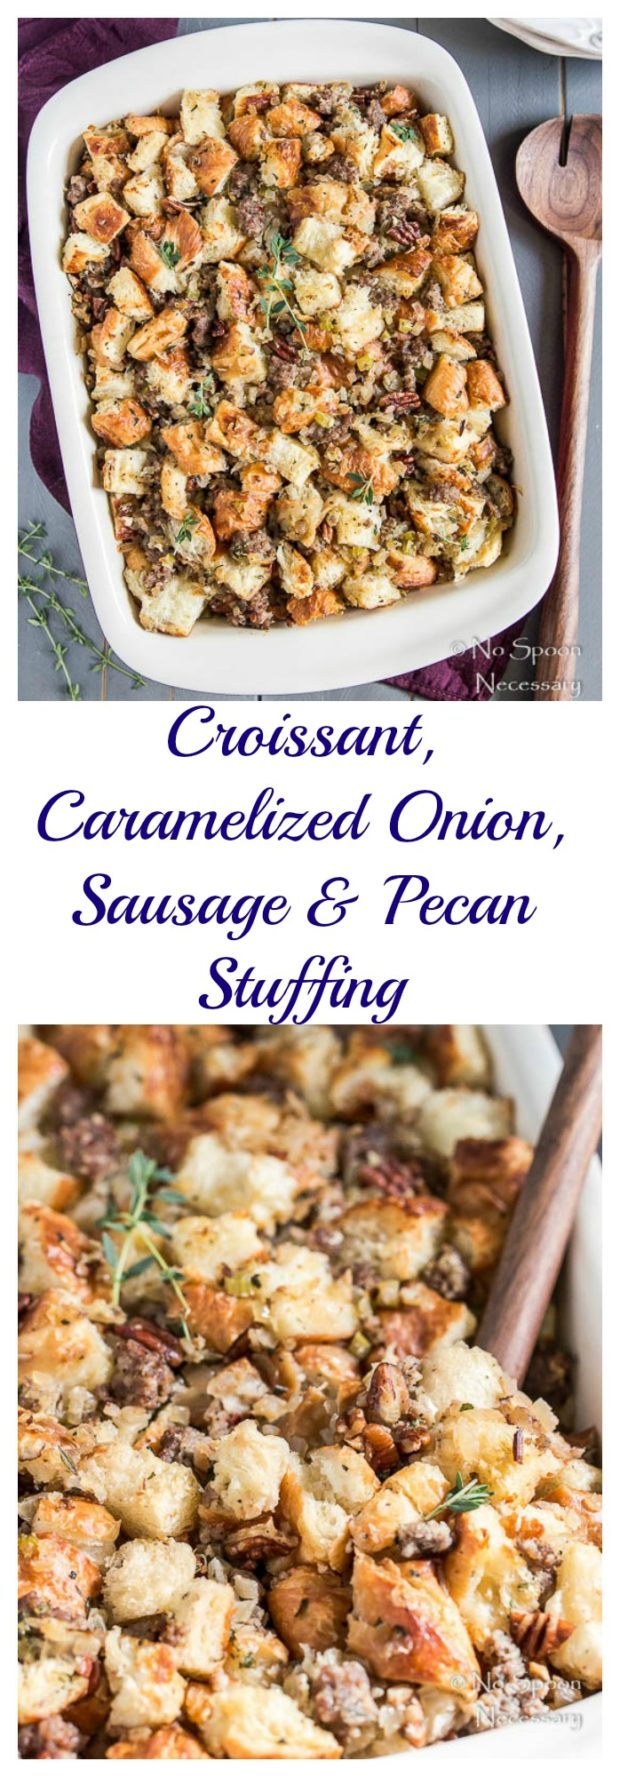 Croissant, Caramelized Onion, Sausage & Pecan Stuffing 2 long